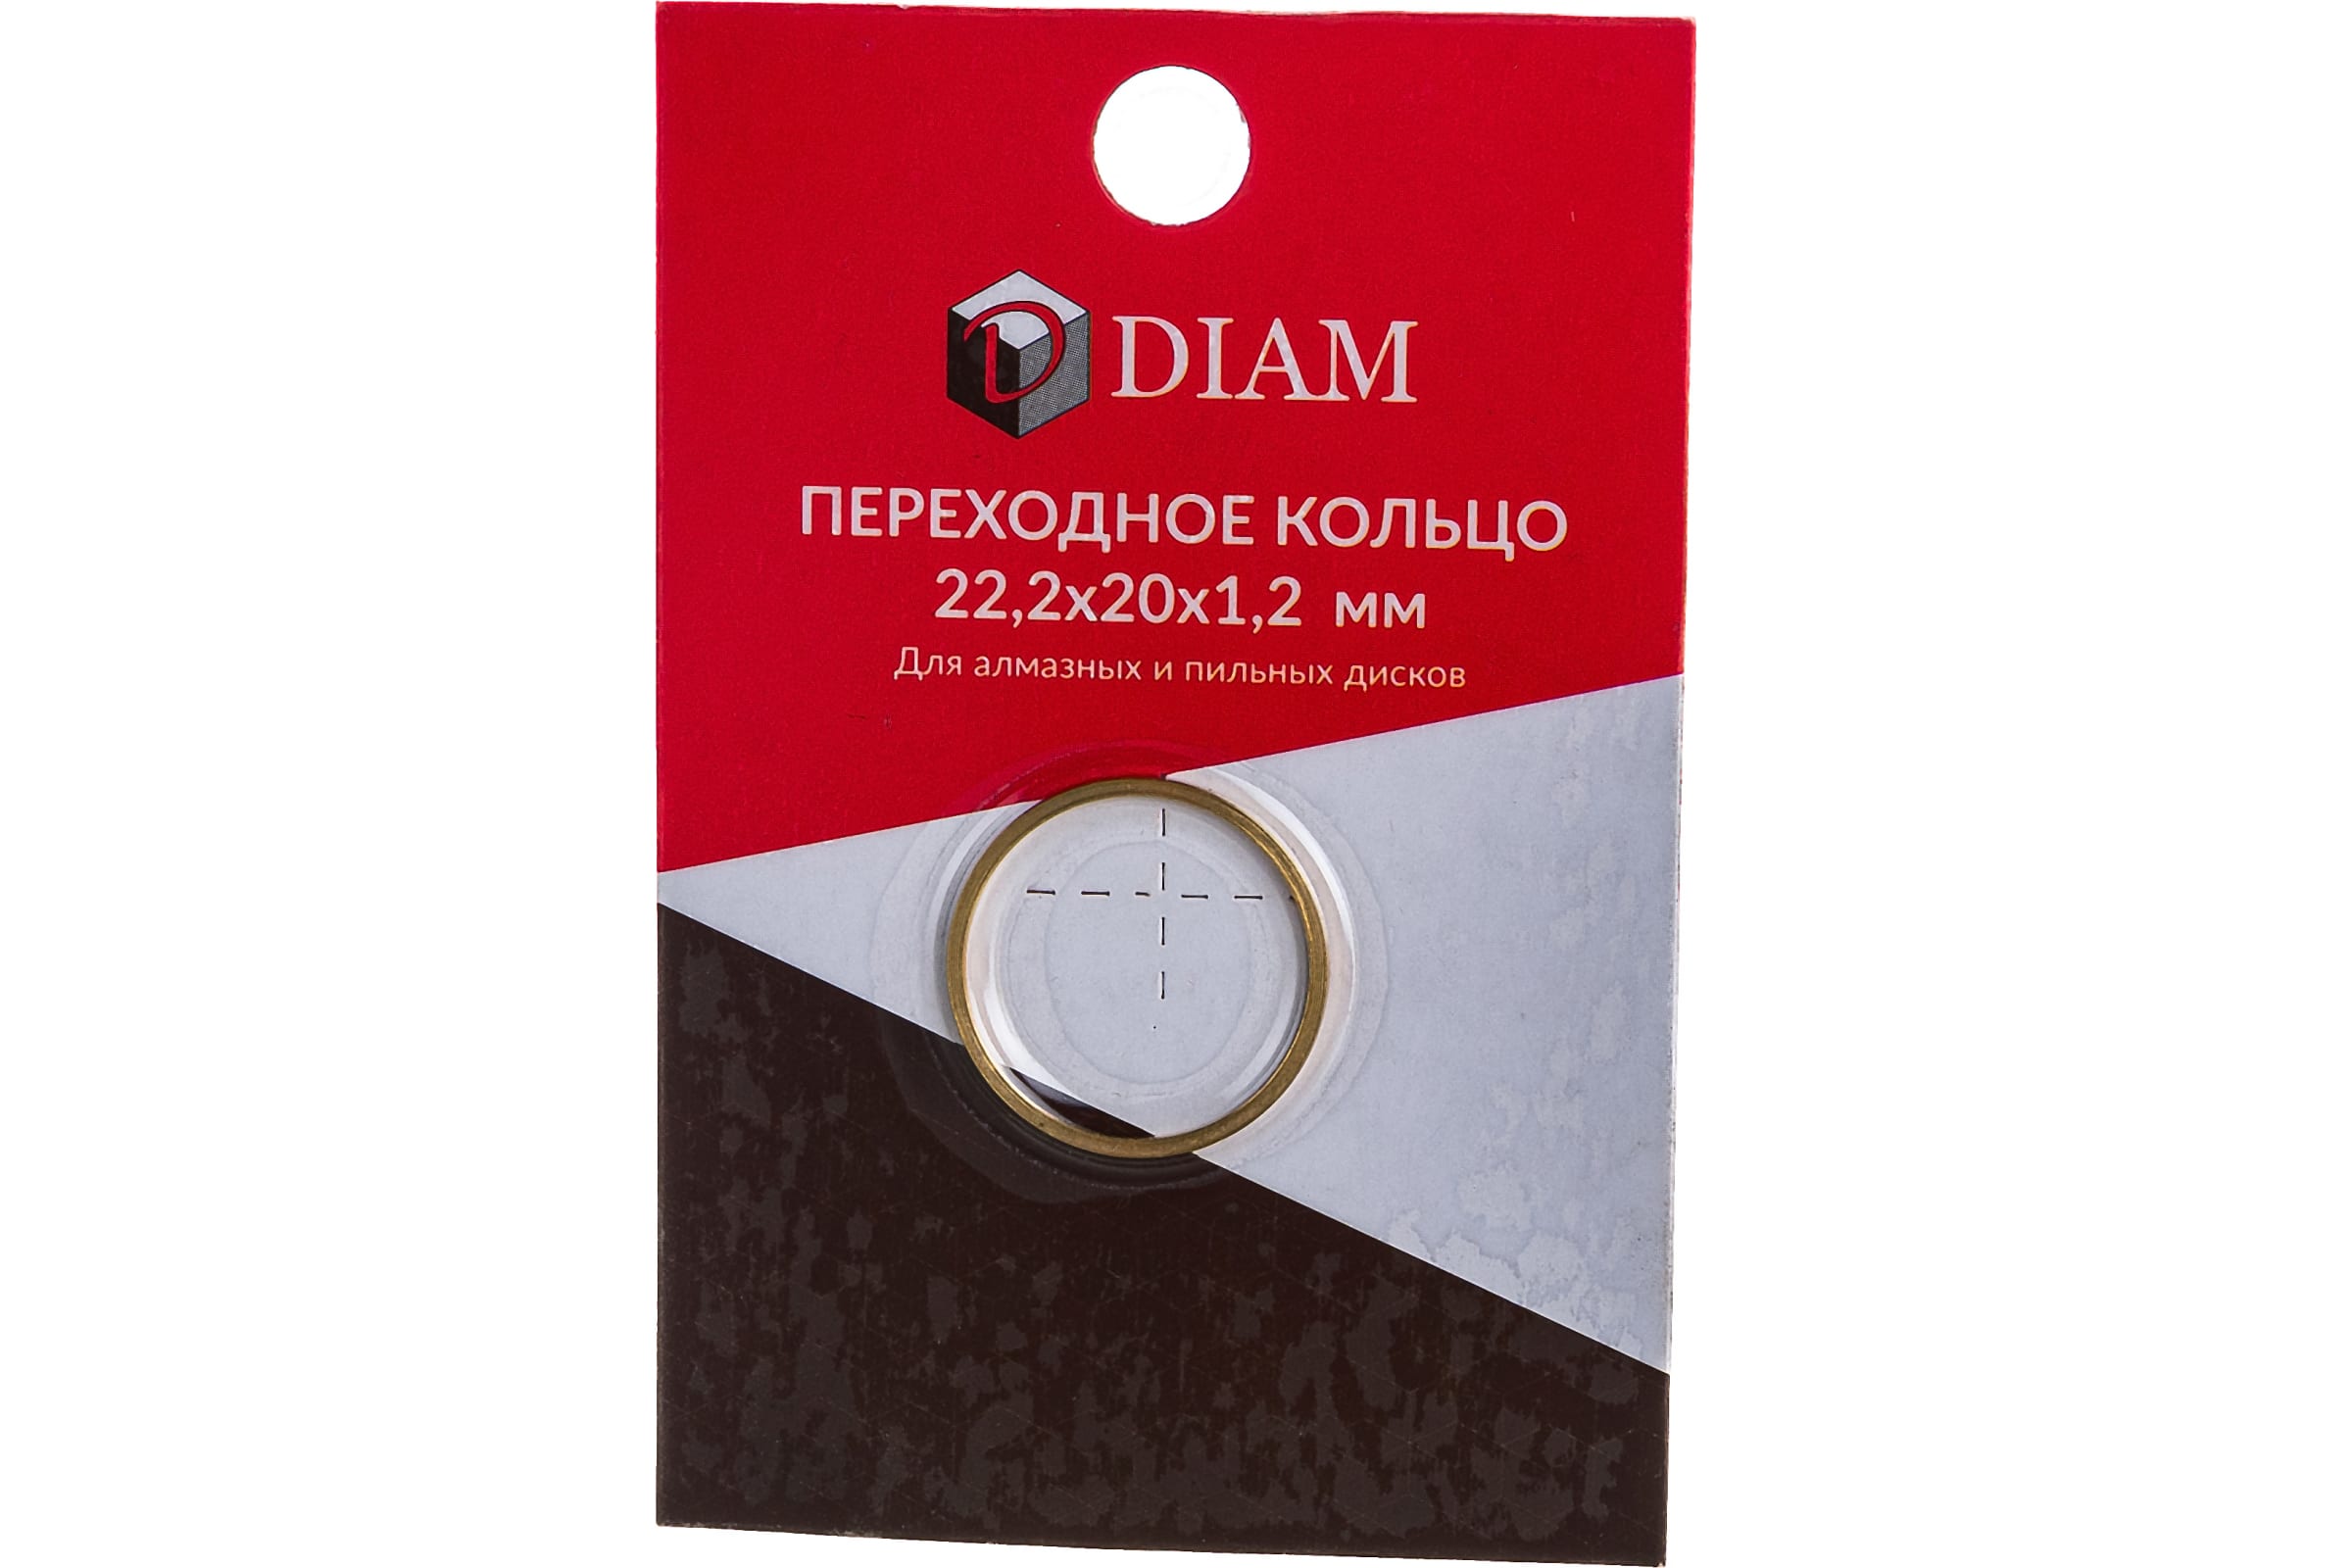 DIAM Переходное кольцо 22,2х20х1,2 640082